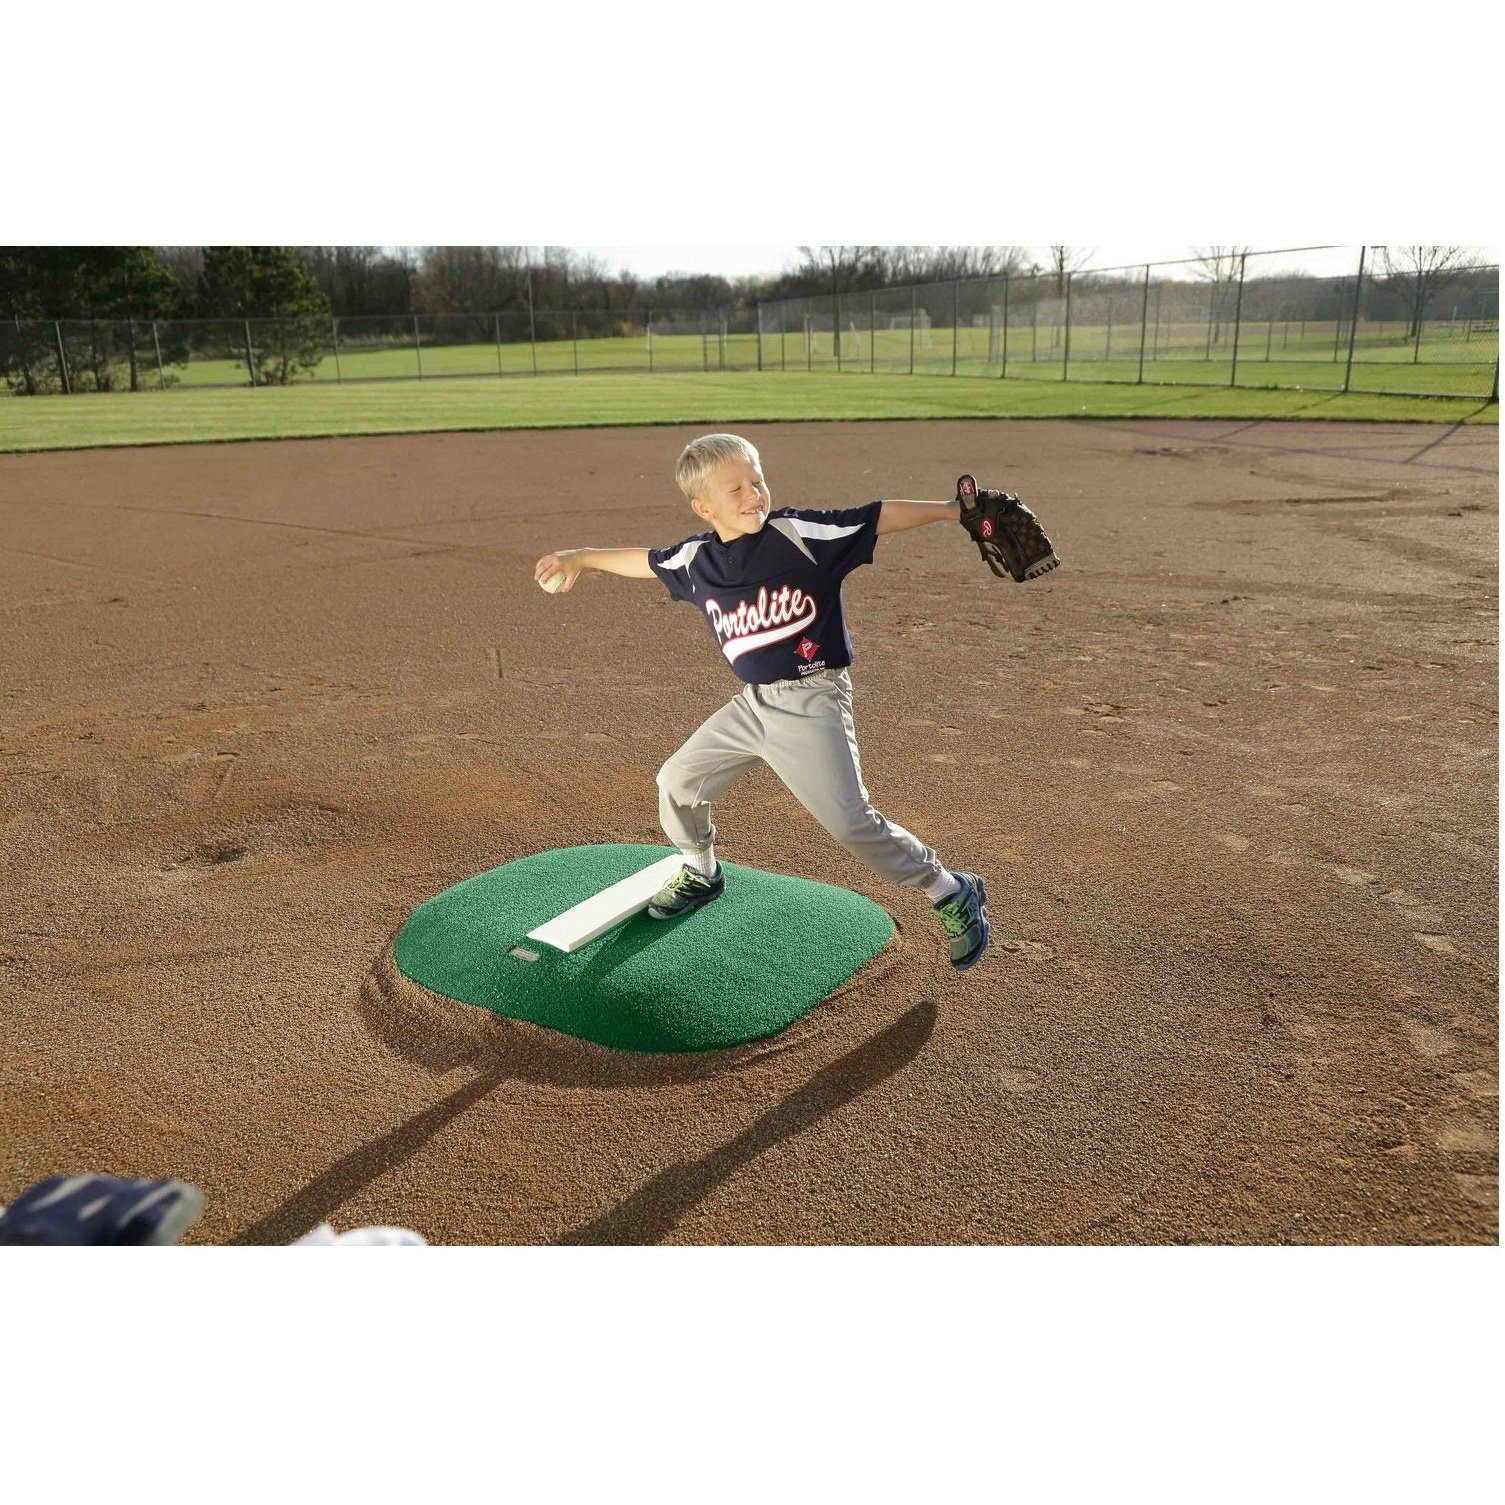 PortoLite 4" Portable Little League Baseball Pitching Mound